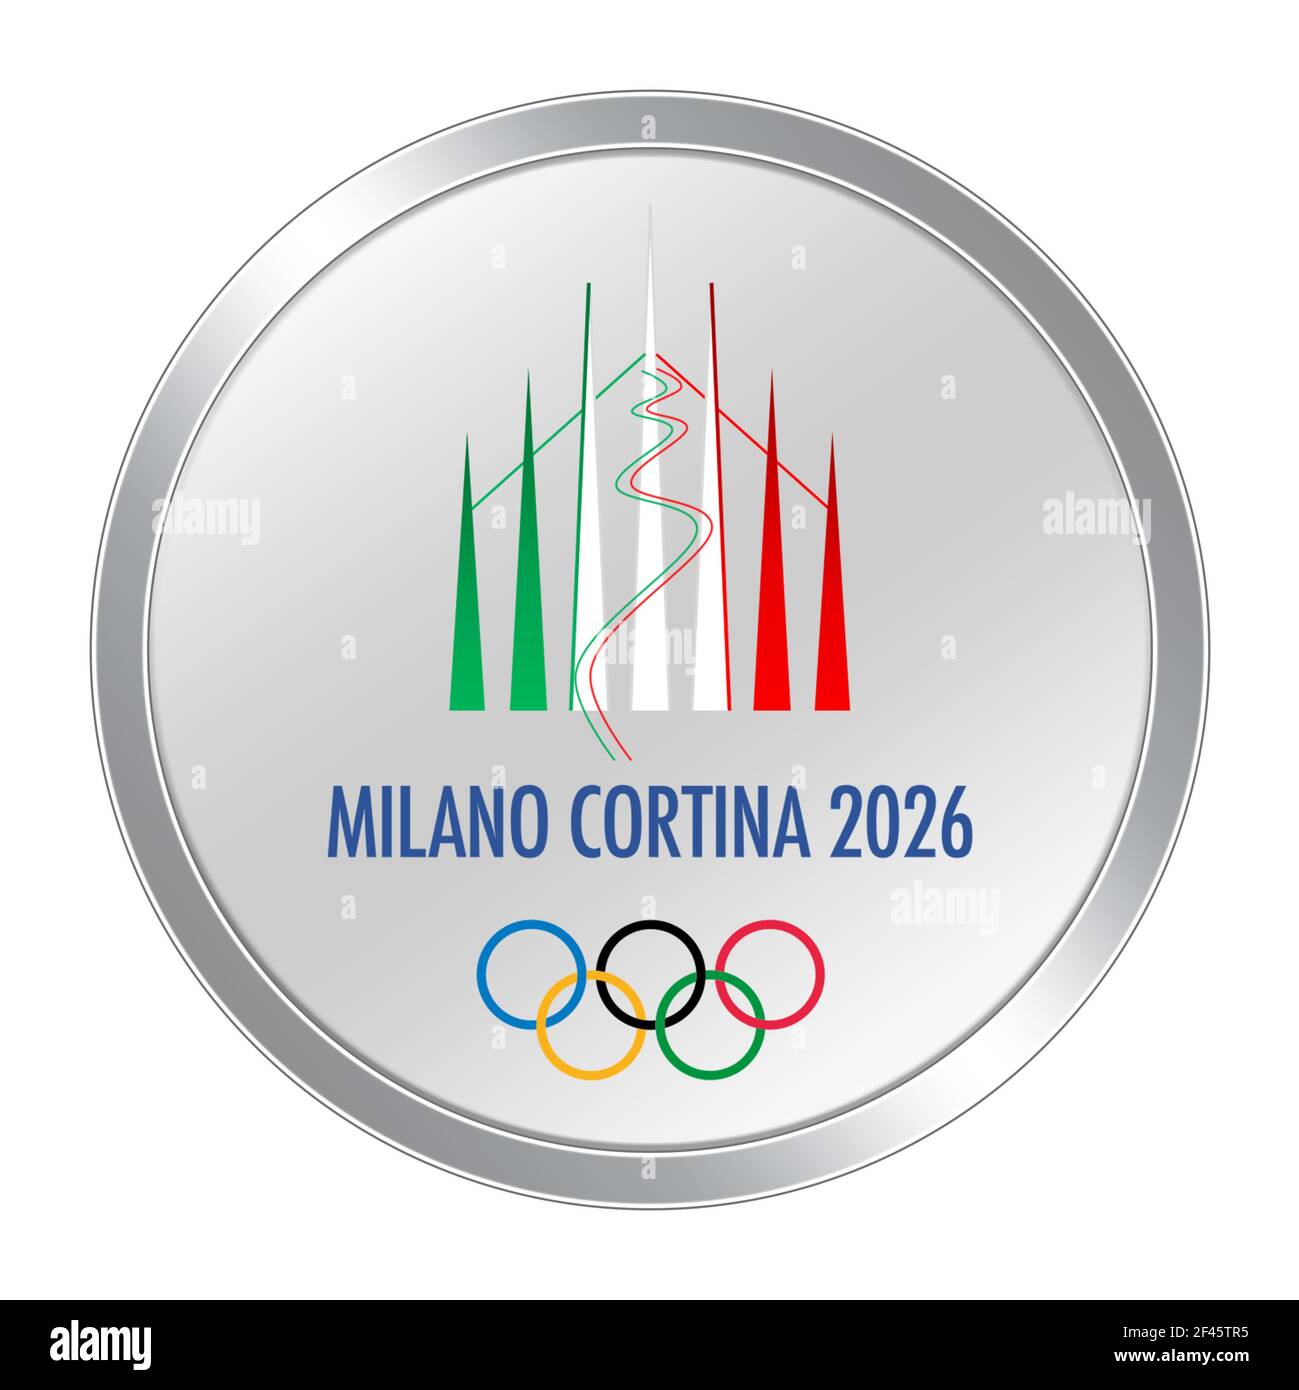 Winter Olympics in Milan Cortina 2026 Stock Photo